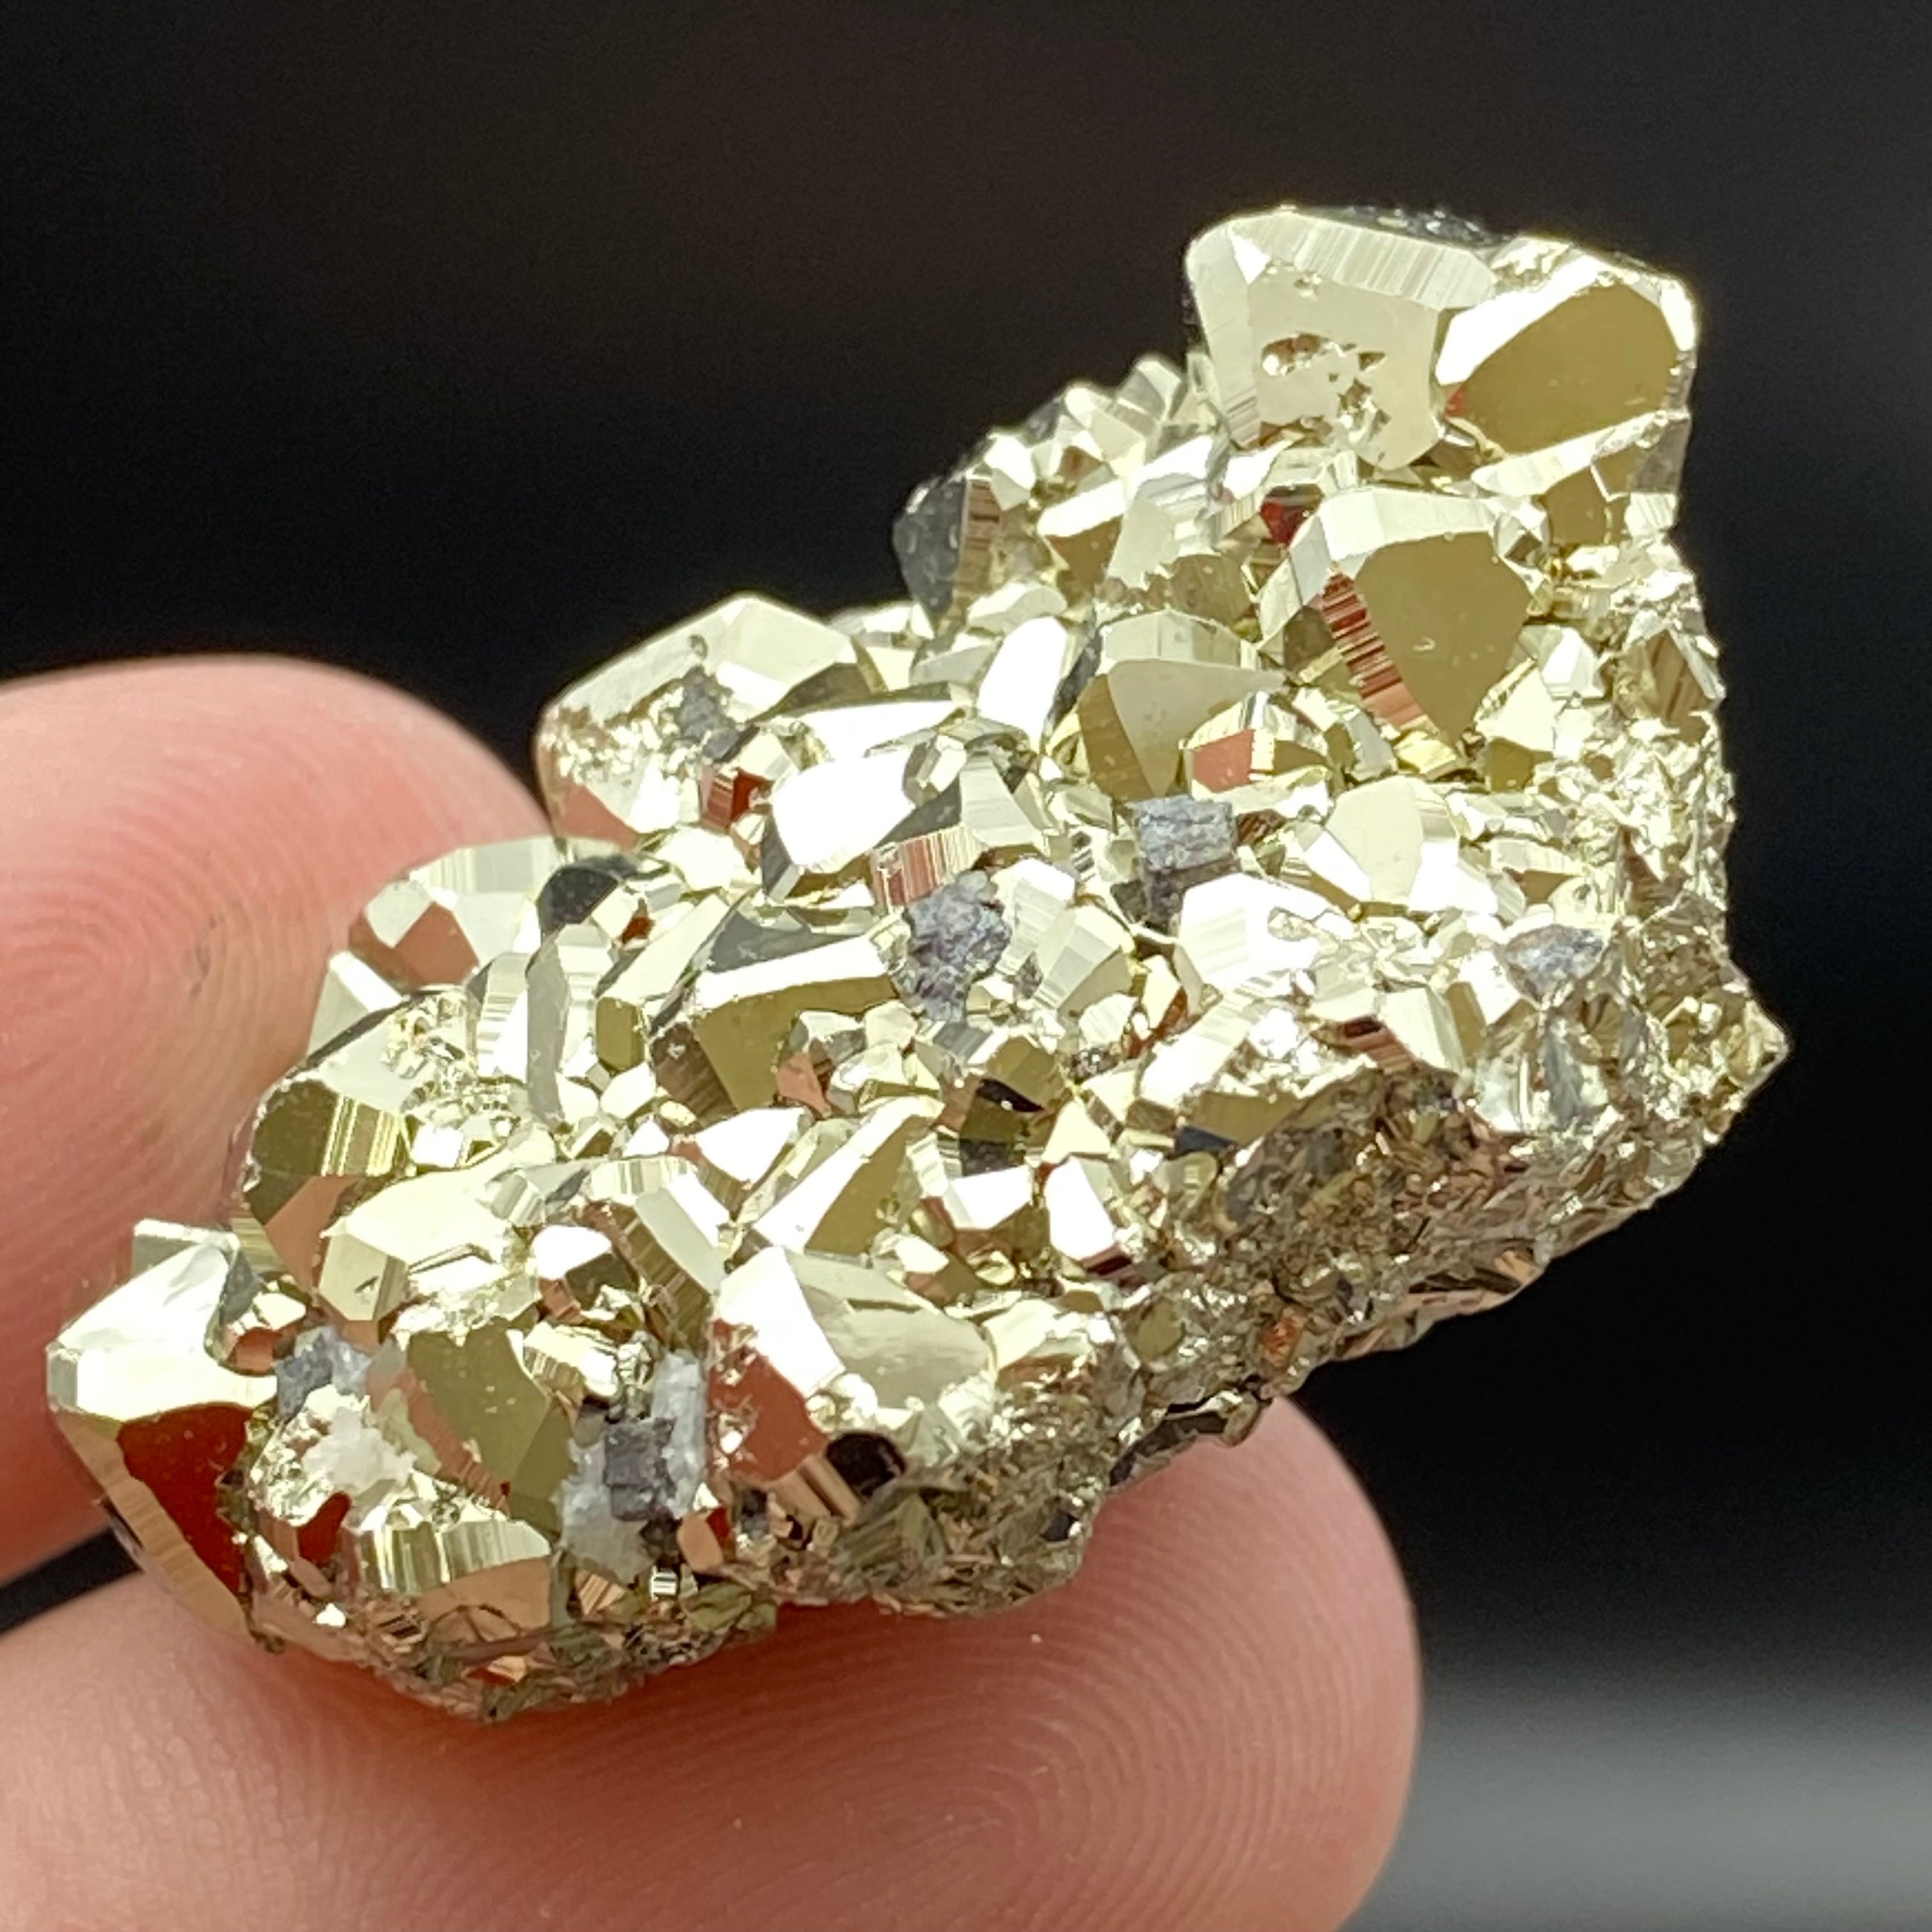 Peruvian Pyrite Crystal - 160